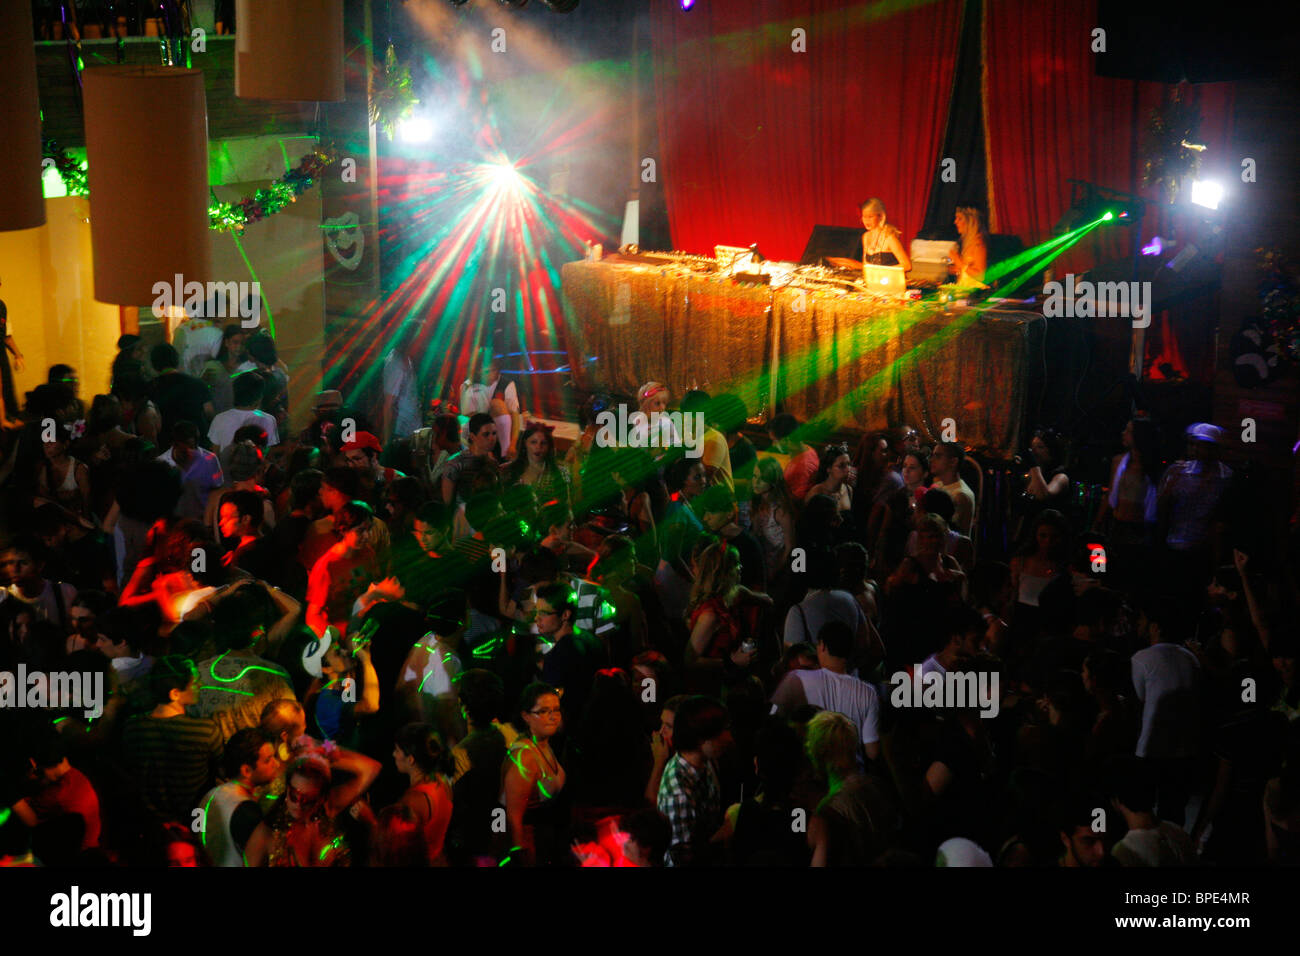 The Asa Branca night club in the Lapa area, Rio de Janeiro, Brazil. Stock Photo